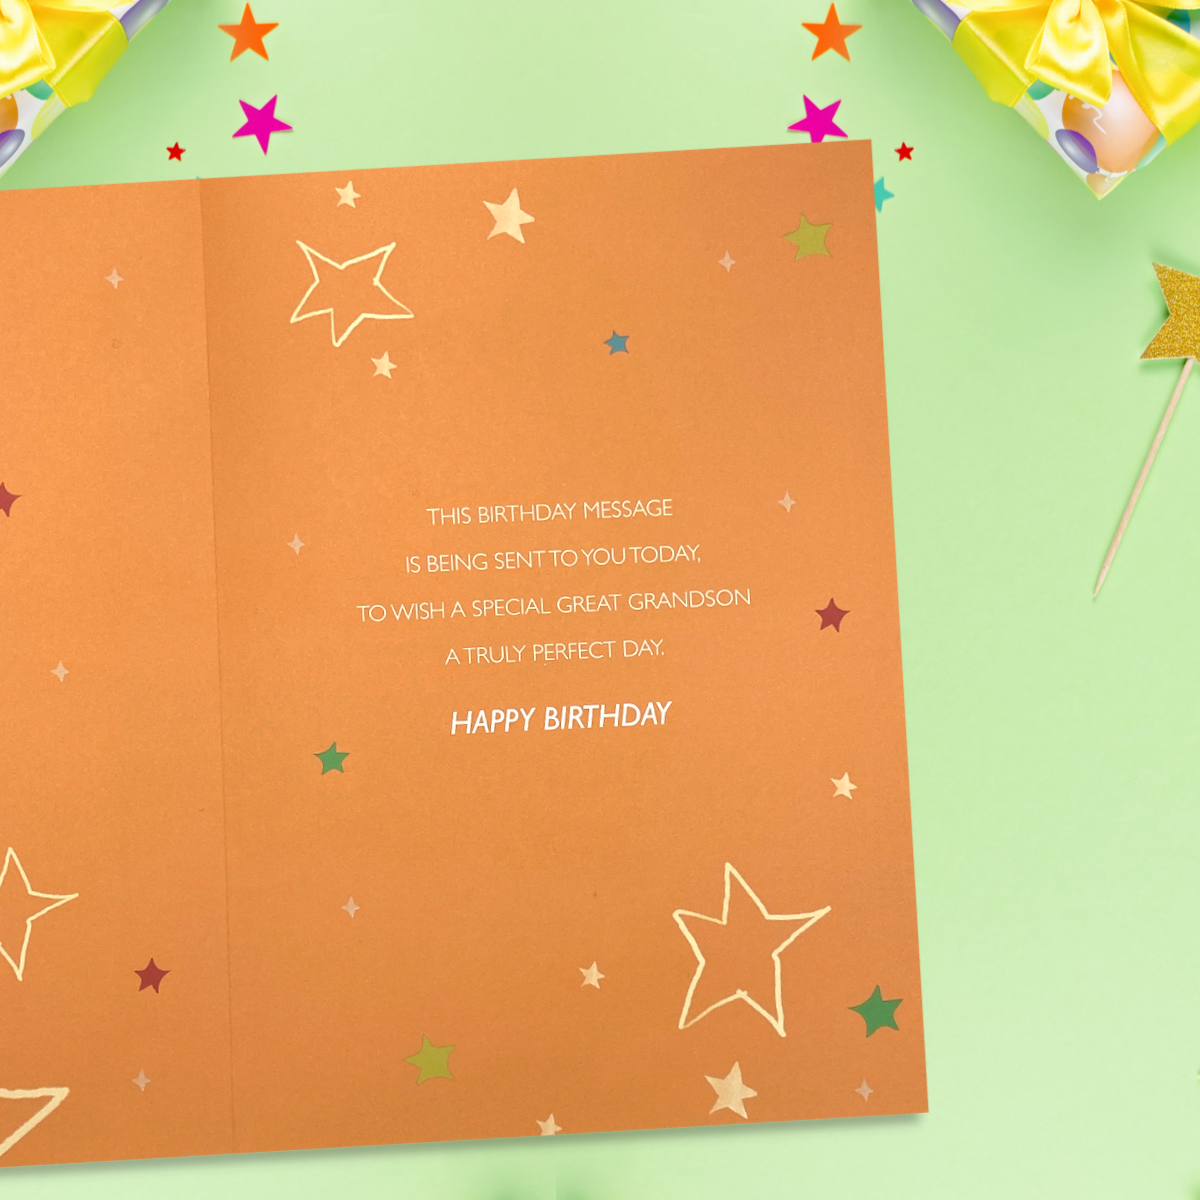 Great Grandson Birthday Card - Make Your Wish